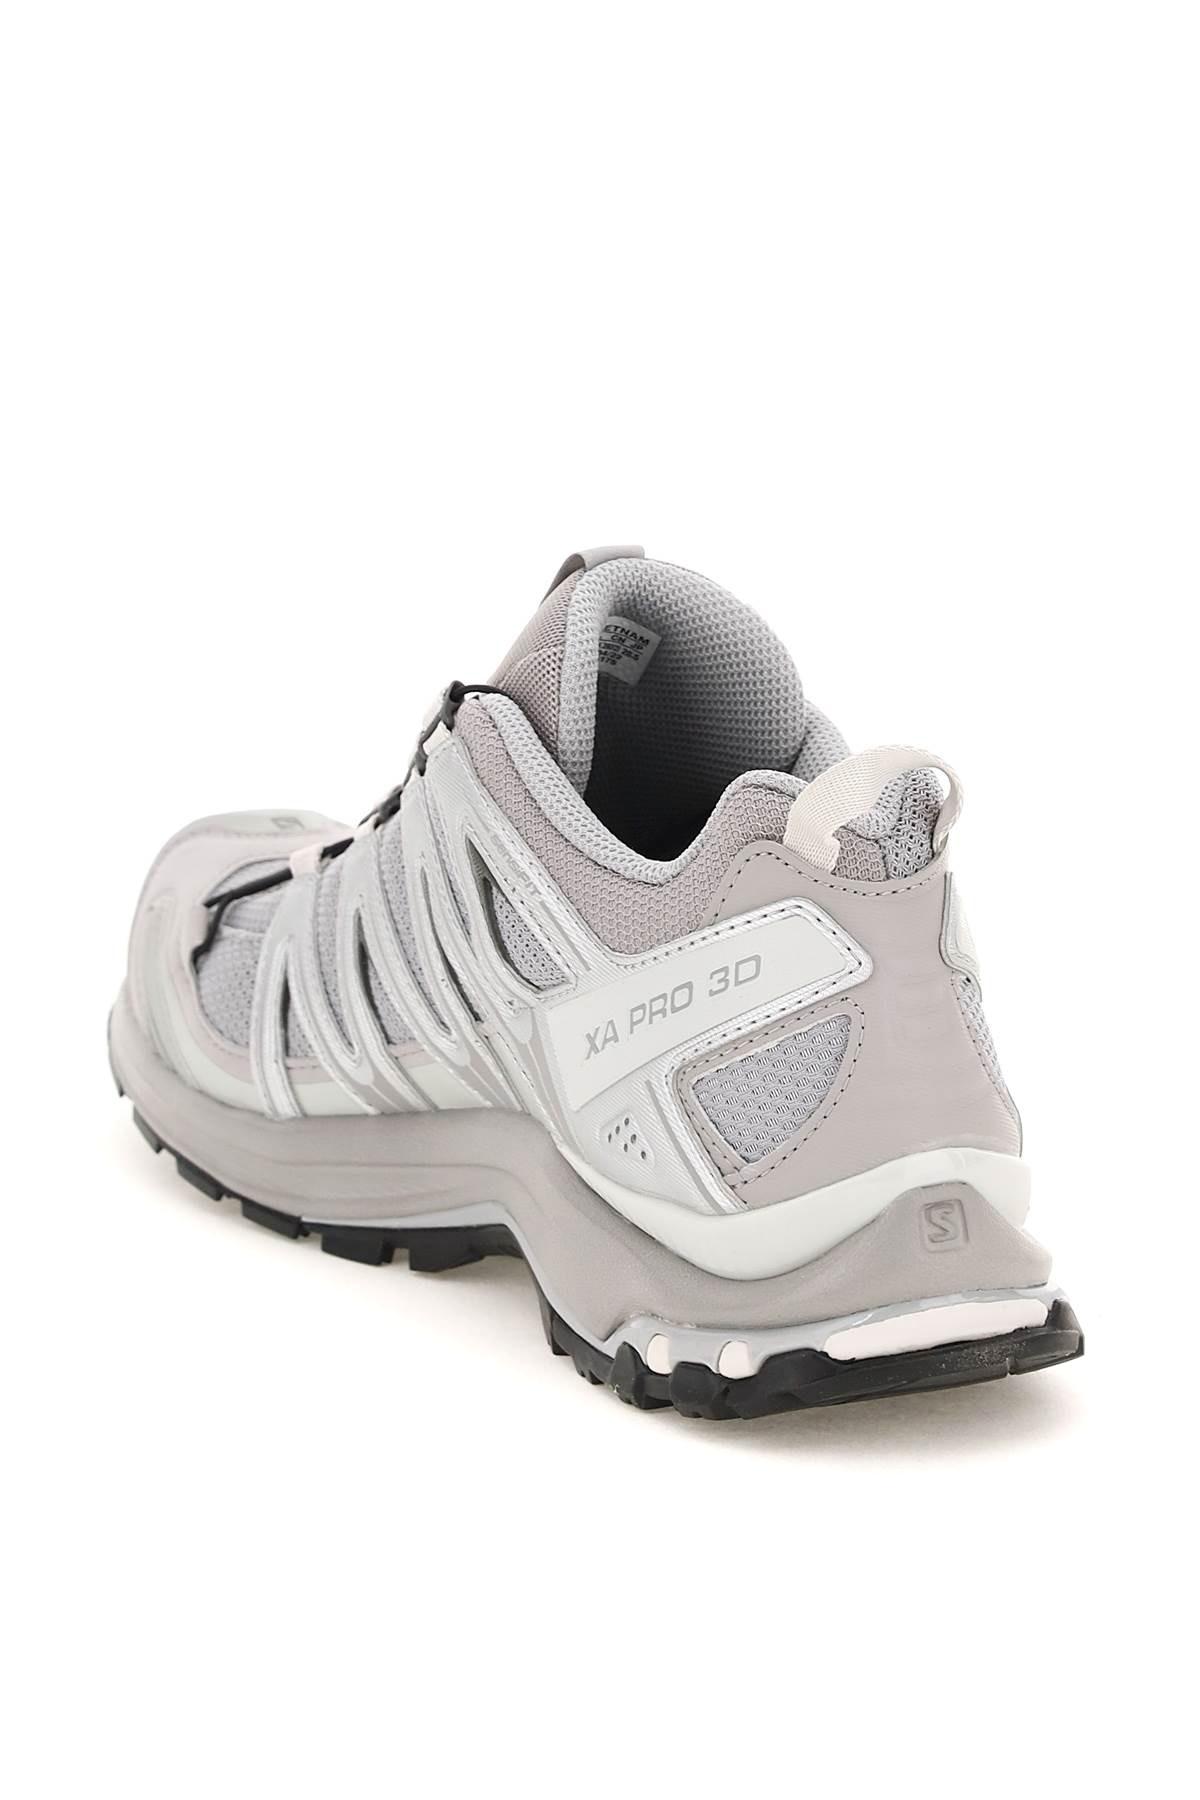 Van hen Gematigd excuus Salomon Rubber Xa Pro 3d Trail Running Shoes in Grey,Silver (Gray) for Men  | Lyst